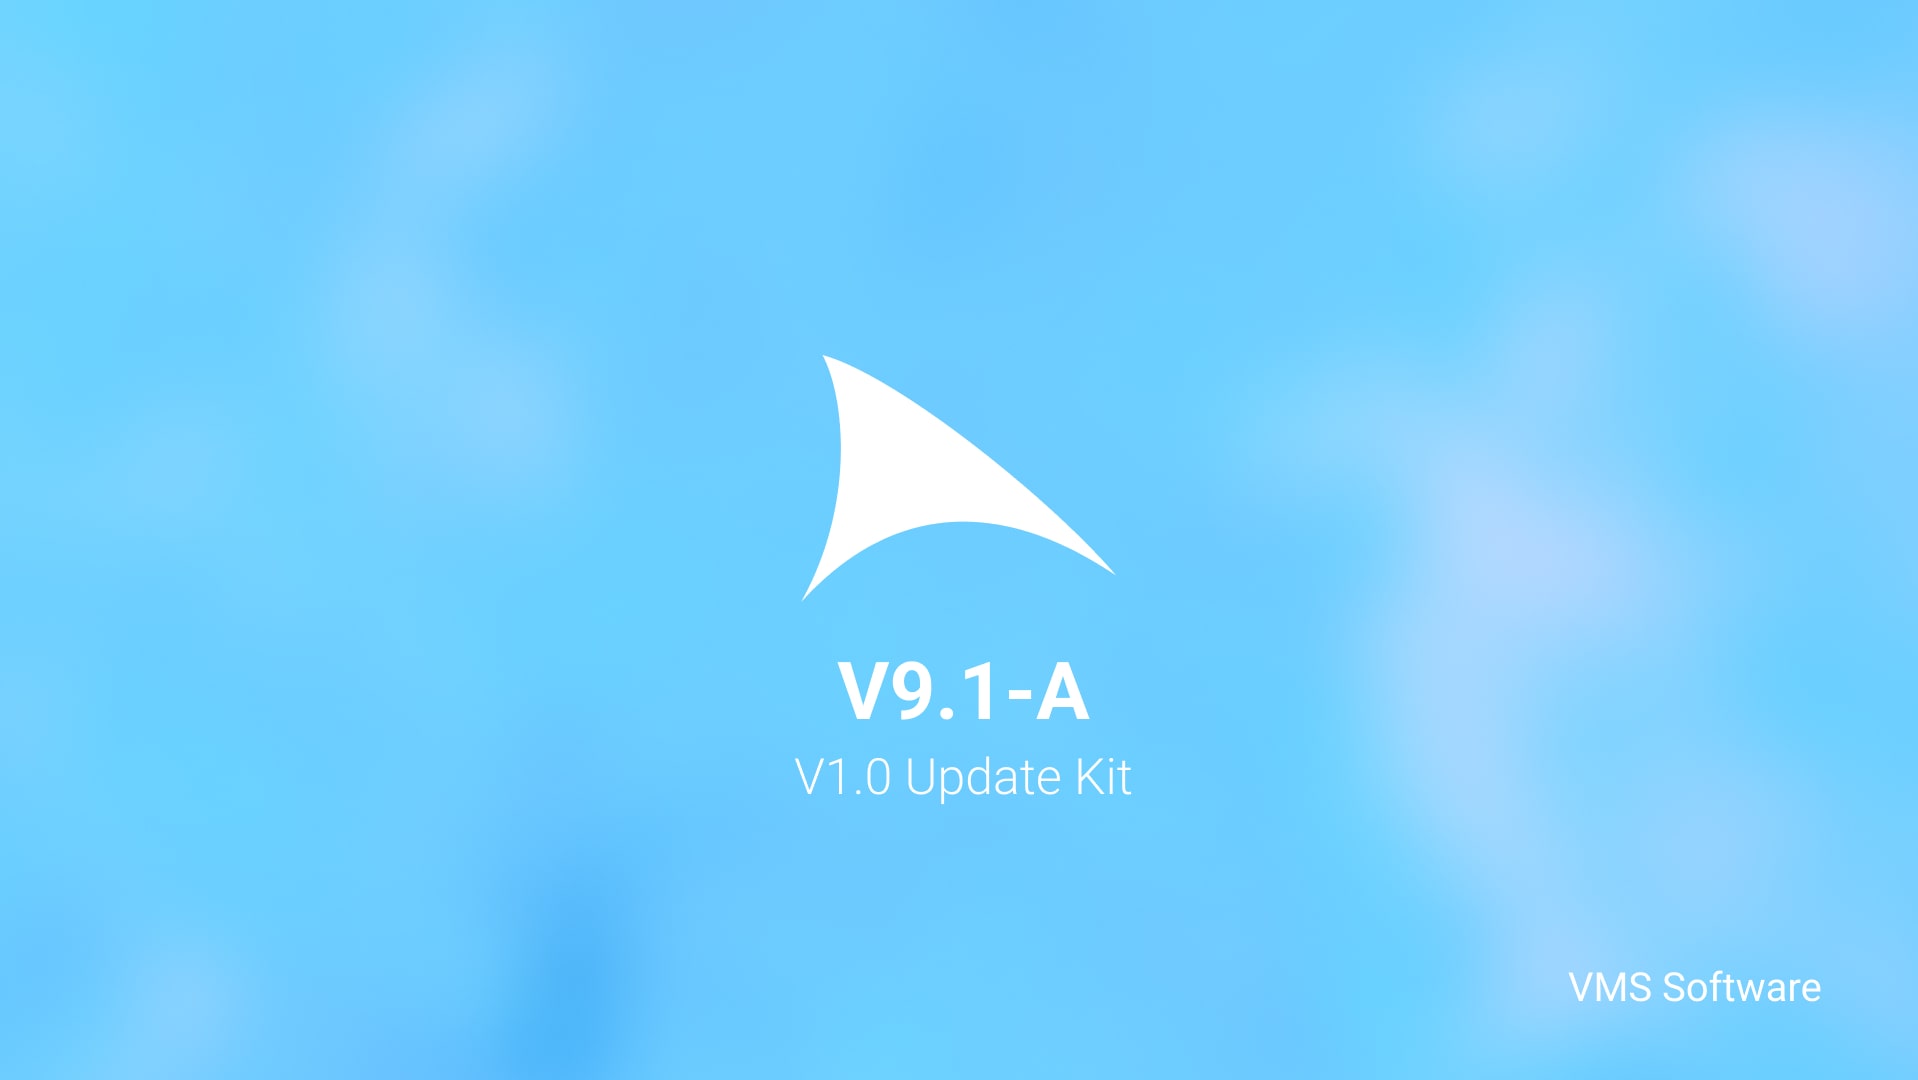 OpenVMS V9.1-A Update Kit Released